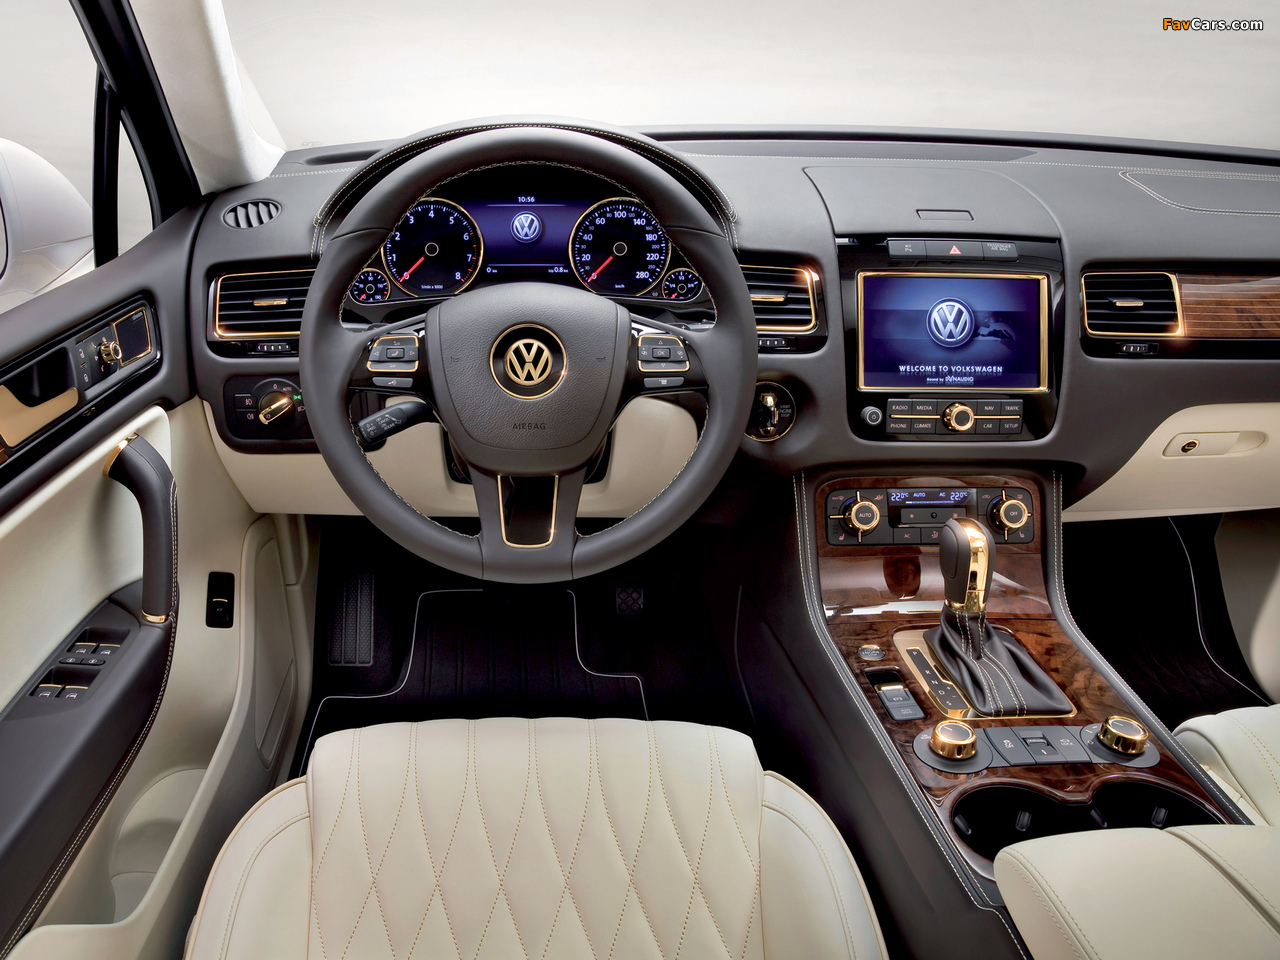 Volkswagen Touareg V8 TDI Gold Edition Concept 2011 images (1280 x 960)